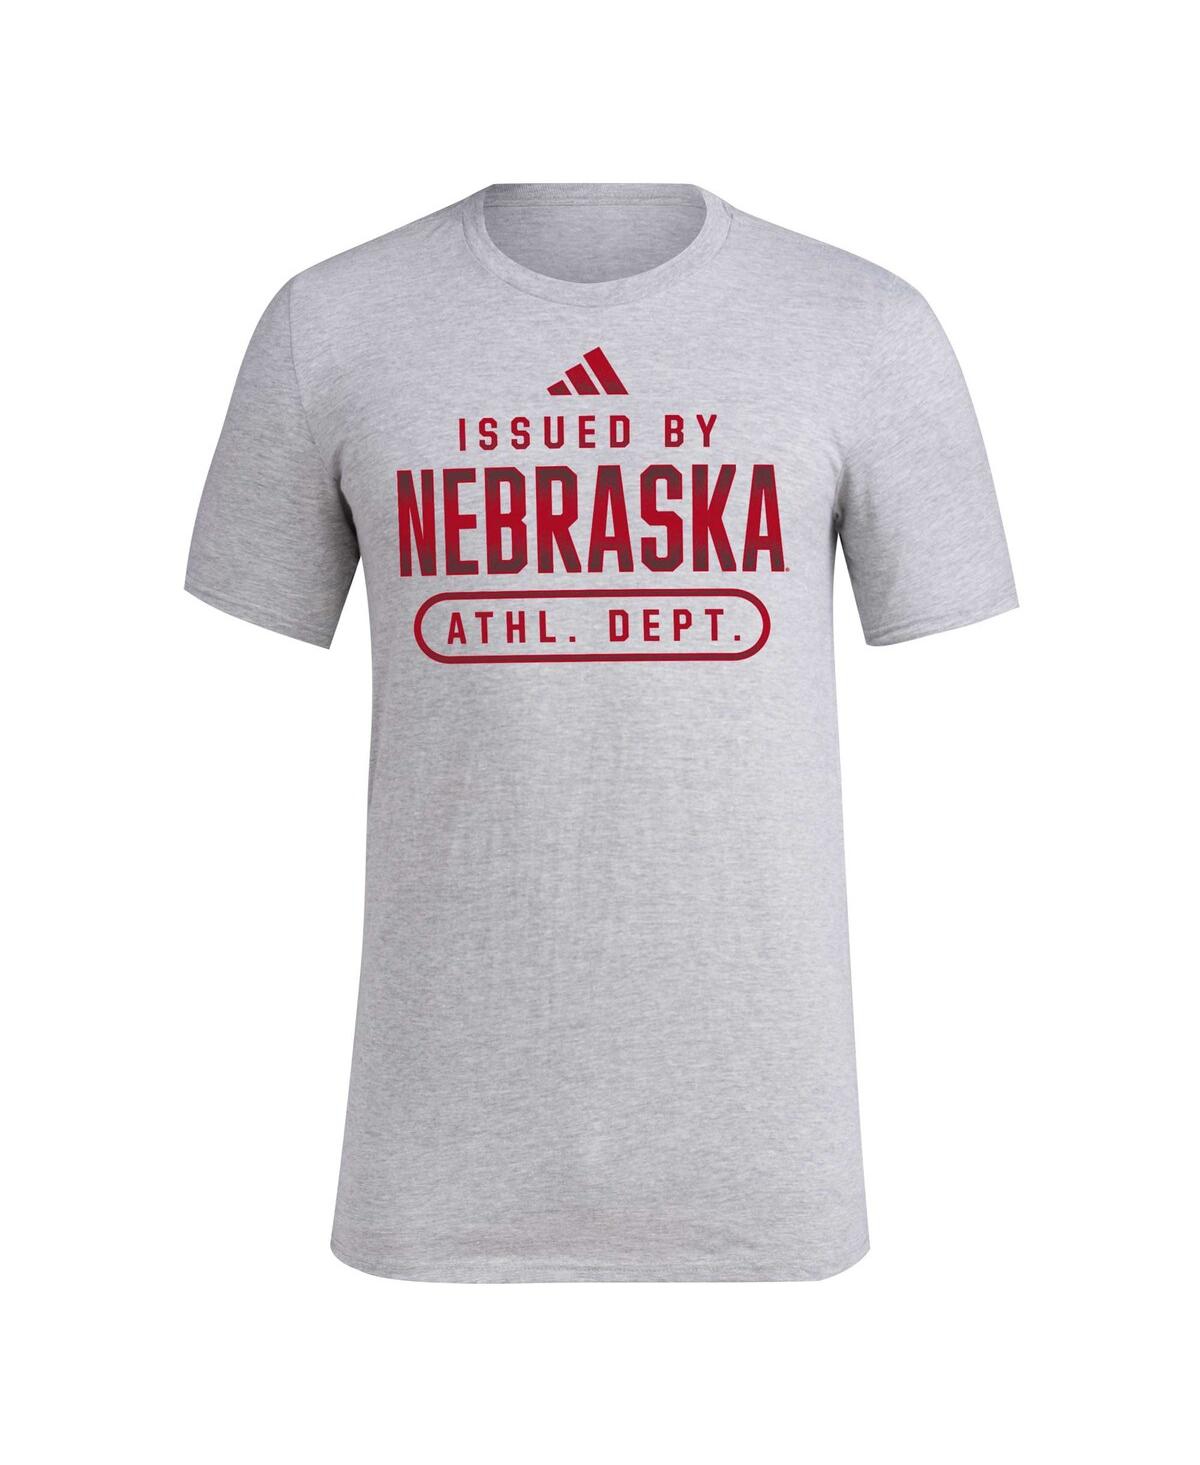 Men's Adidas White Nebraska Huskers Replica Baseball Jersey